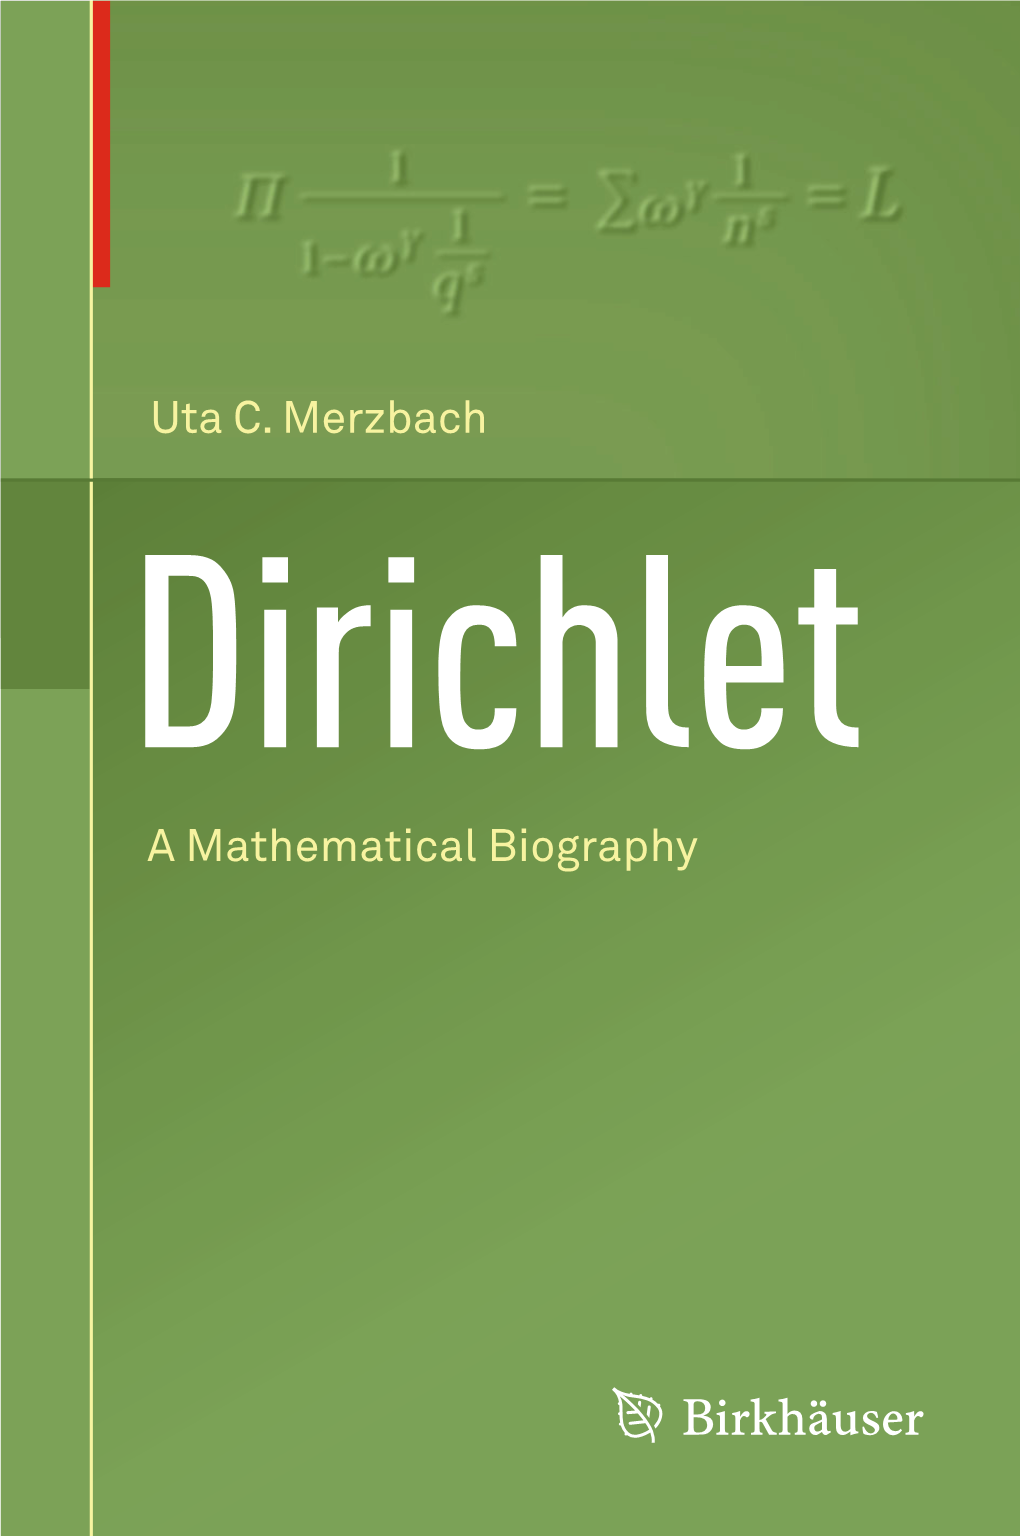 Uta C. Merzbach a Mathematical Biography